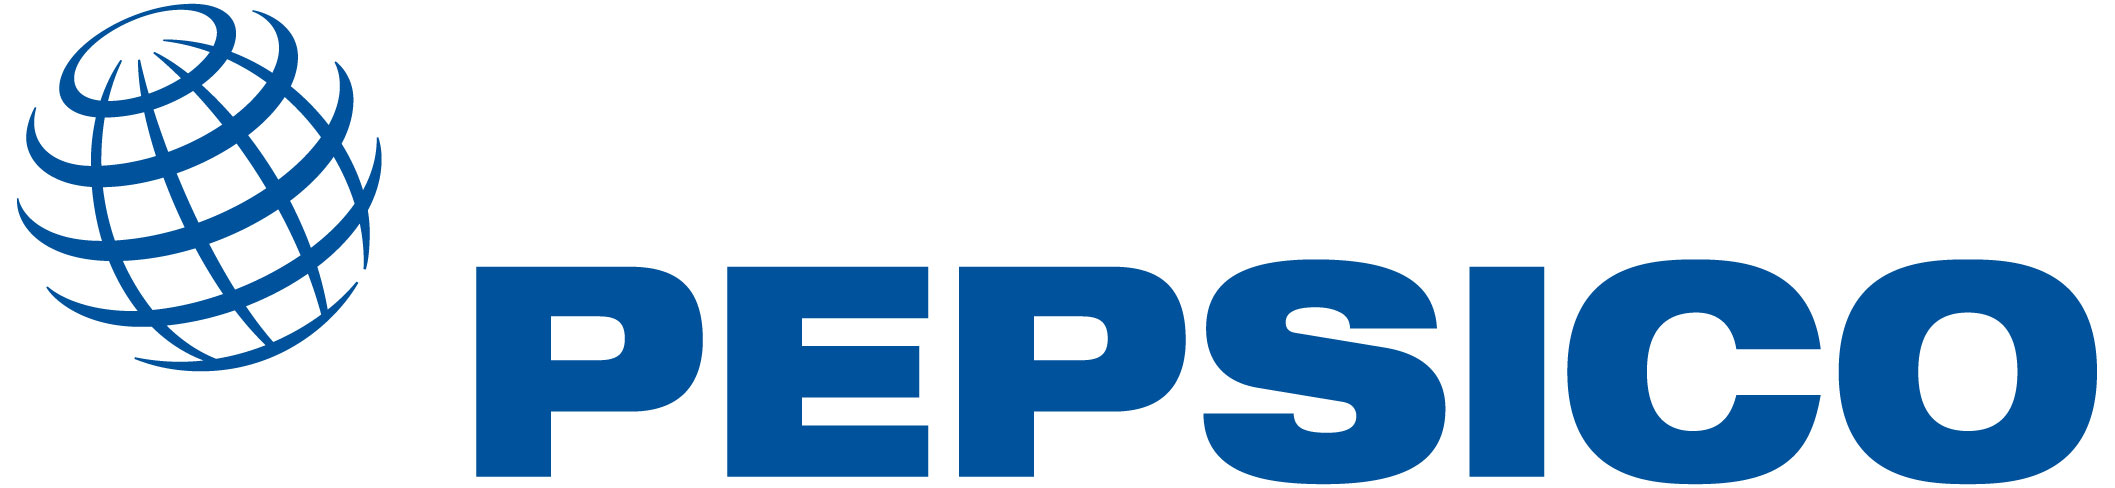 Logo for Pepsico